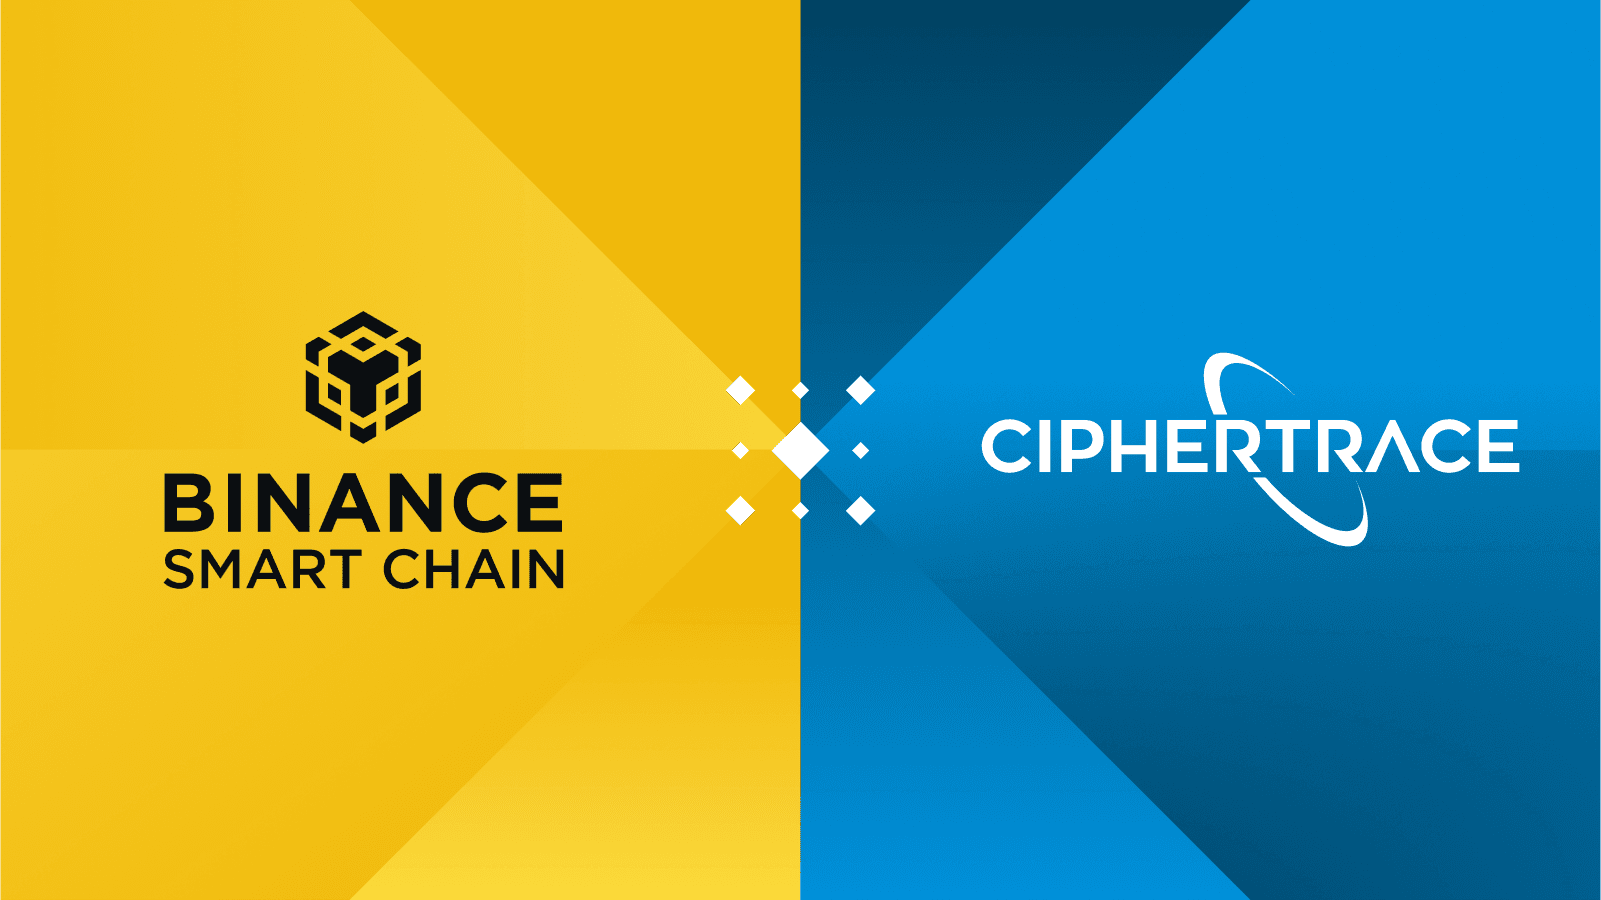 Binance Smart Chain and CipherTrace